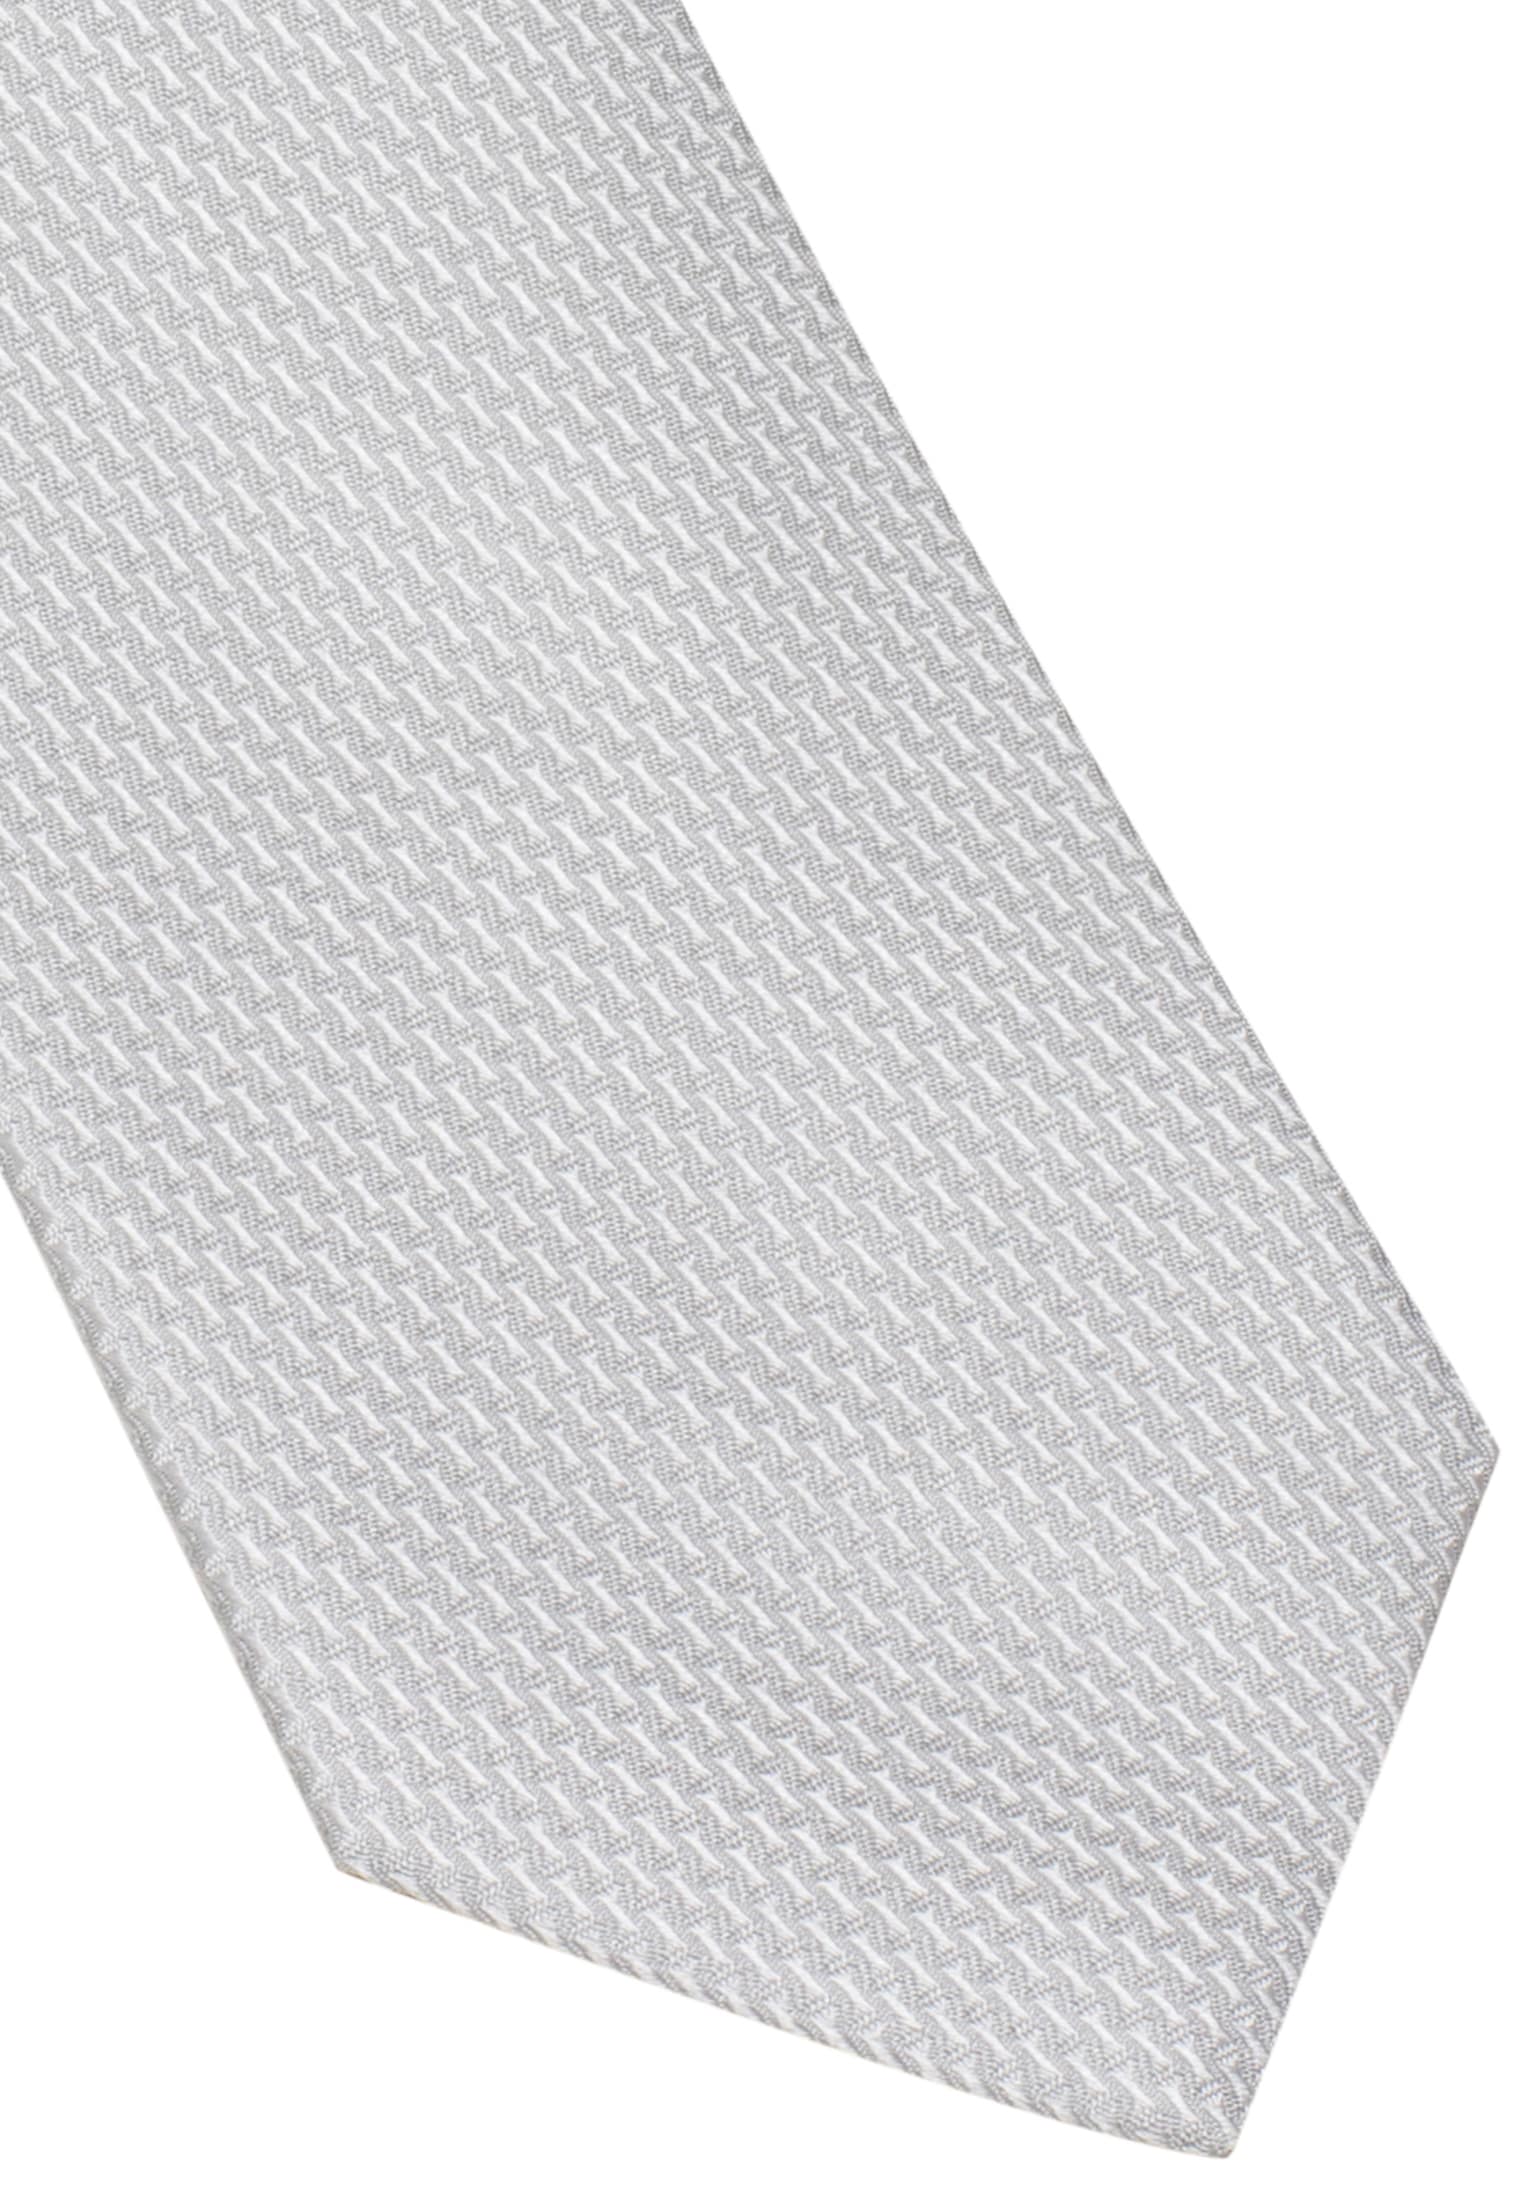 Krawatte | silber | in | strukturiert silber 142 1AC01872-03-11-142